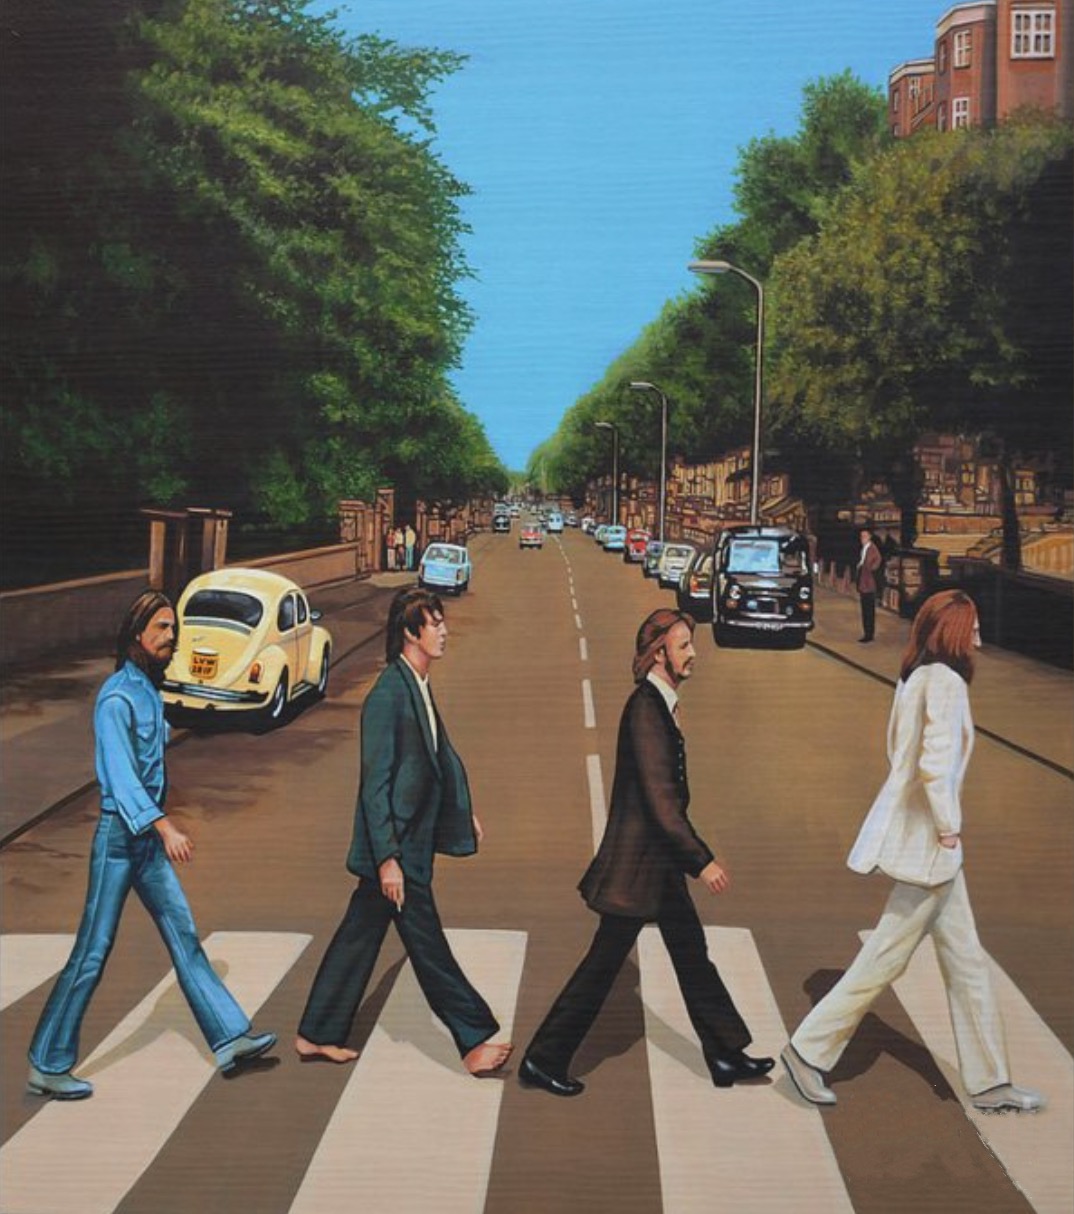 The Beatles Wood Print